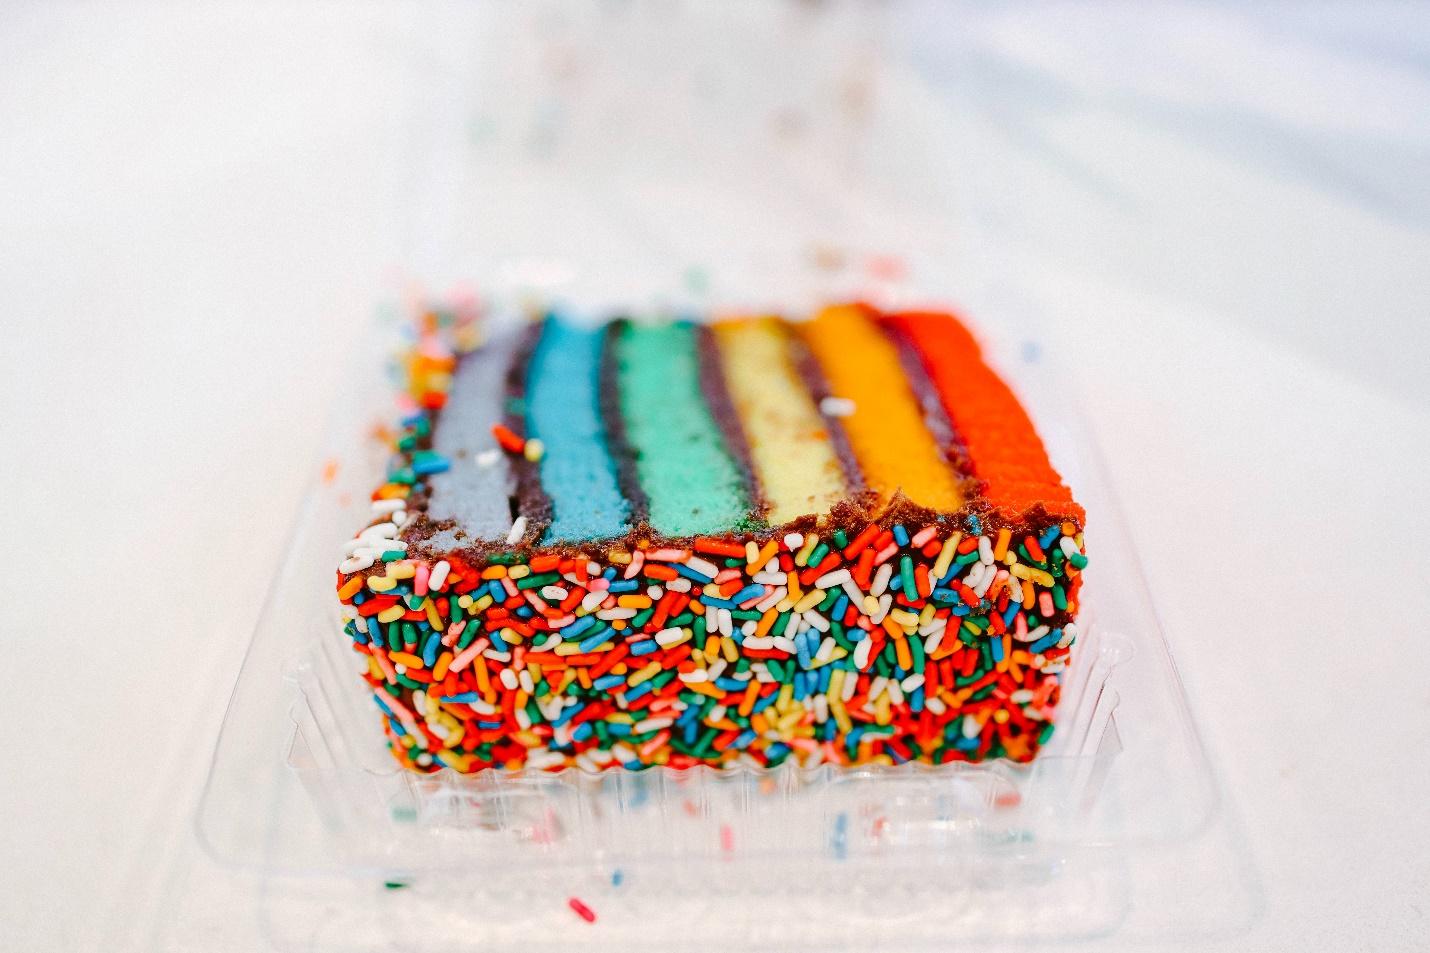 A piece of rainbow cake